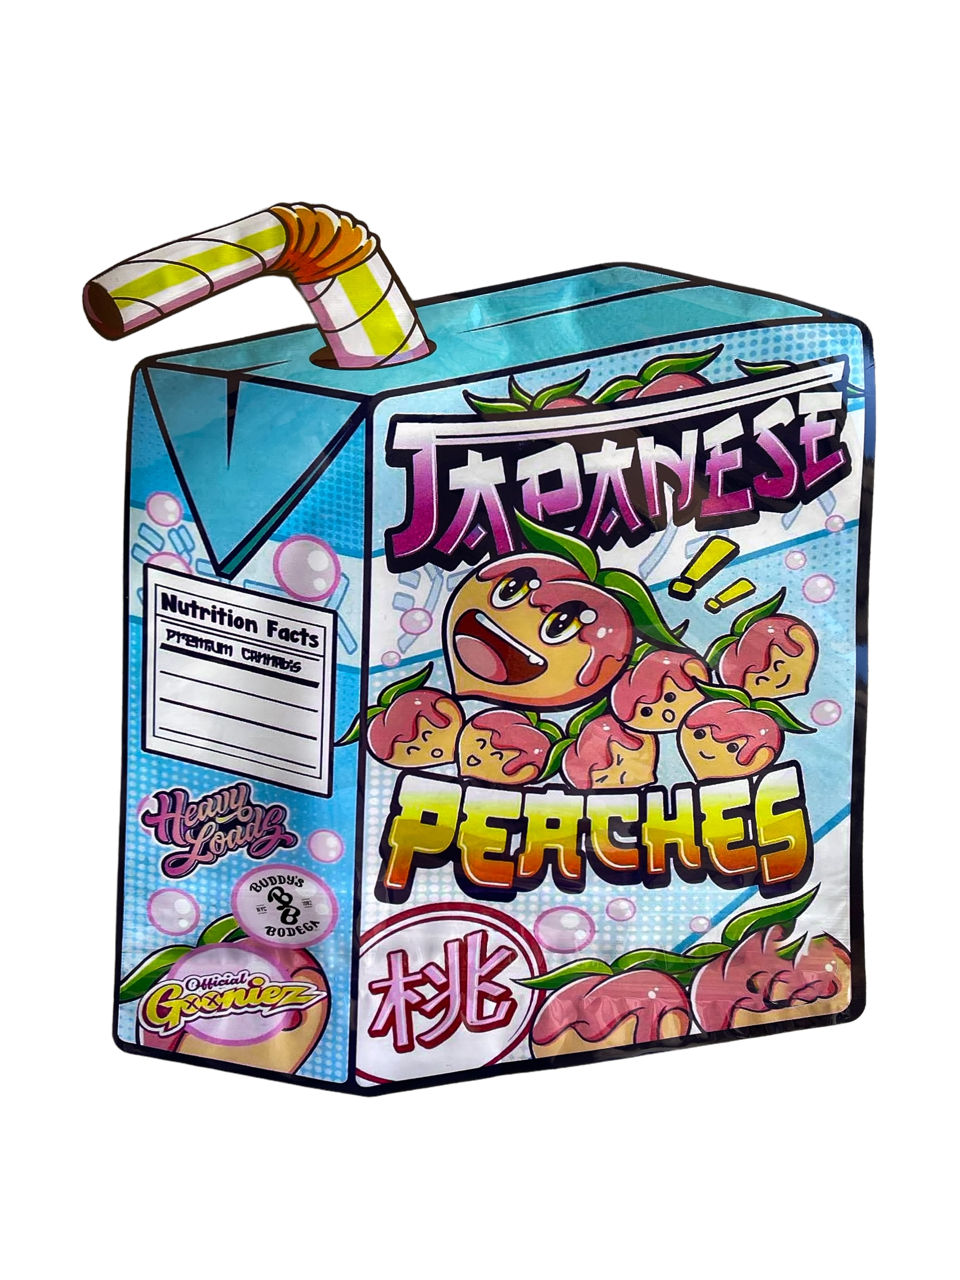 Japanese Peaches Pound Bag (Large) 1LBS - 16OZ (454g)